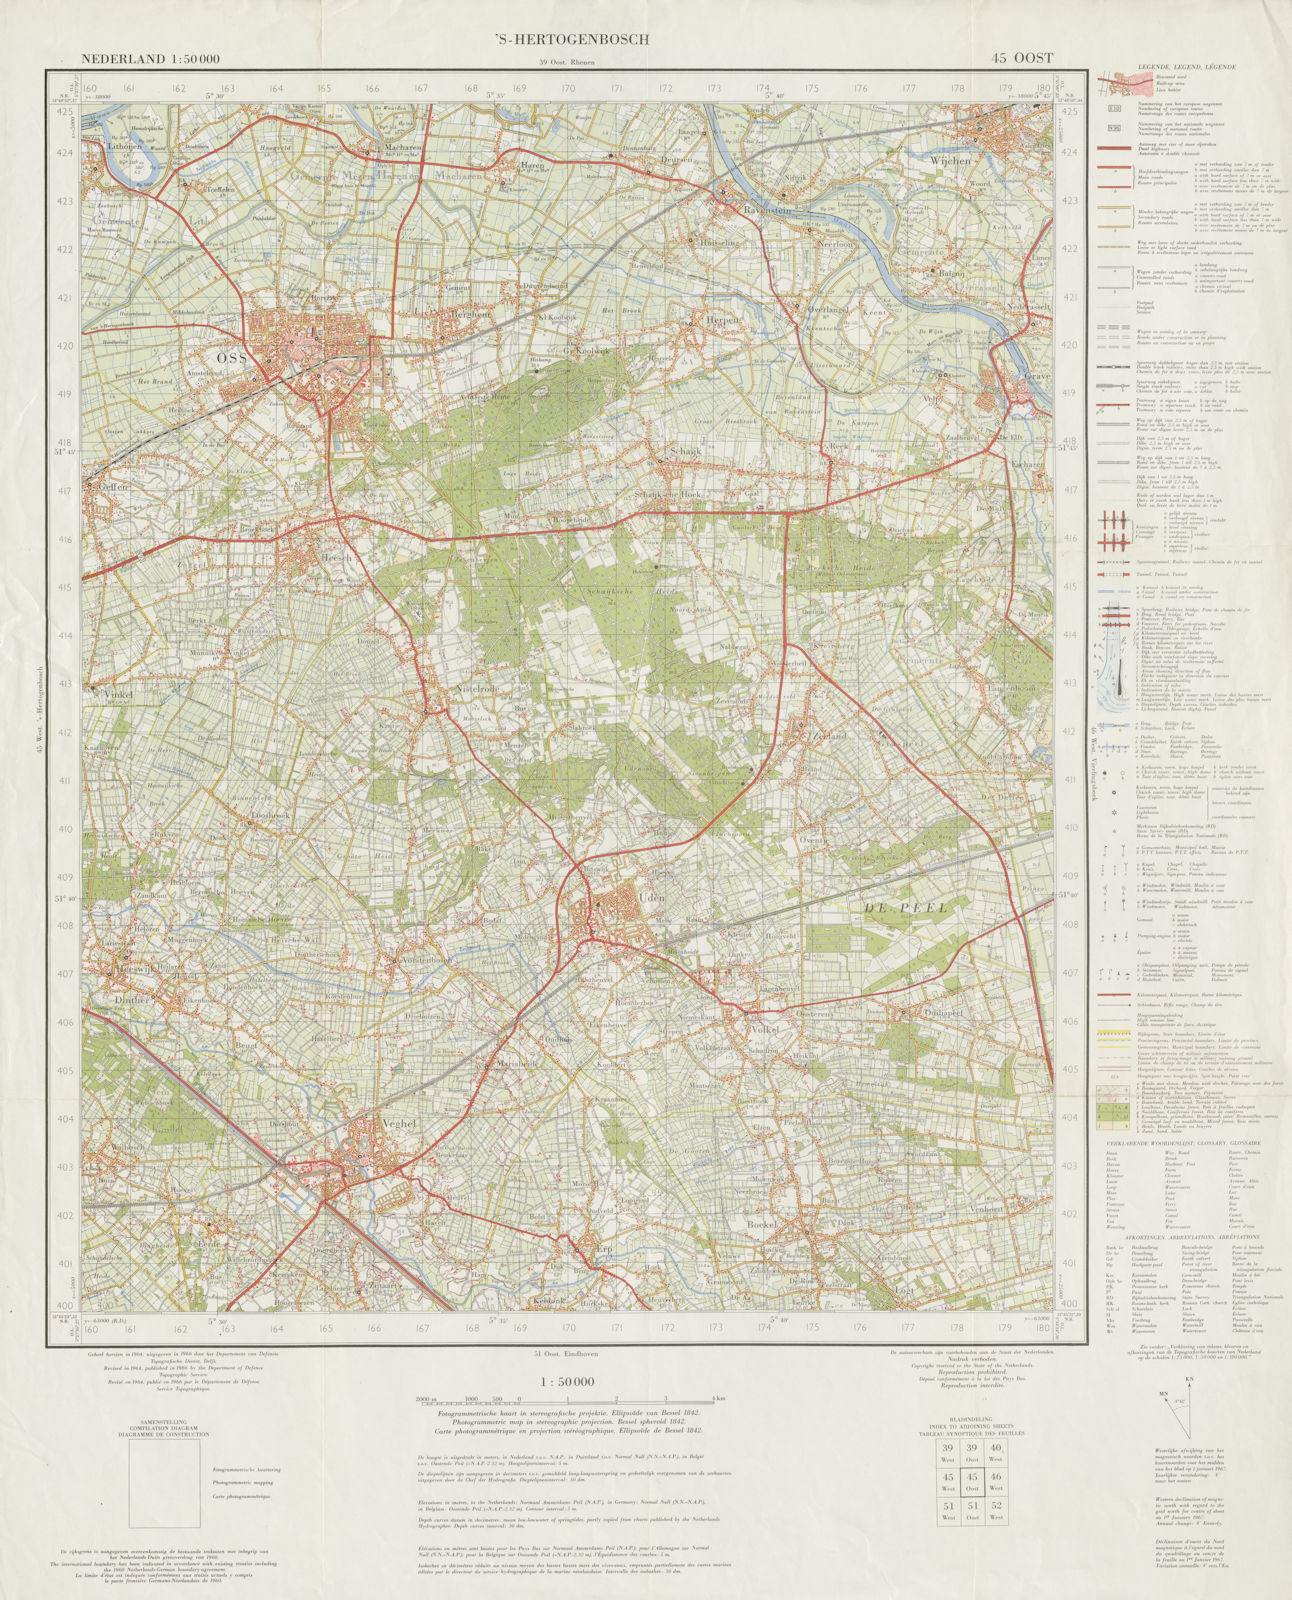 Oss environs topo map Wijchen Veghel Uden Zeeland Heesch Sheet 45 Oost 1966